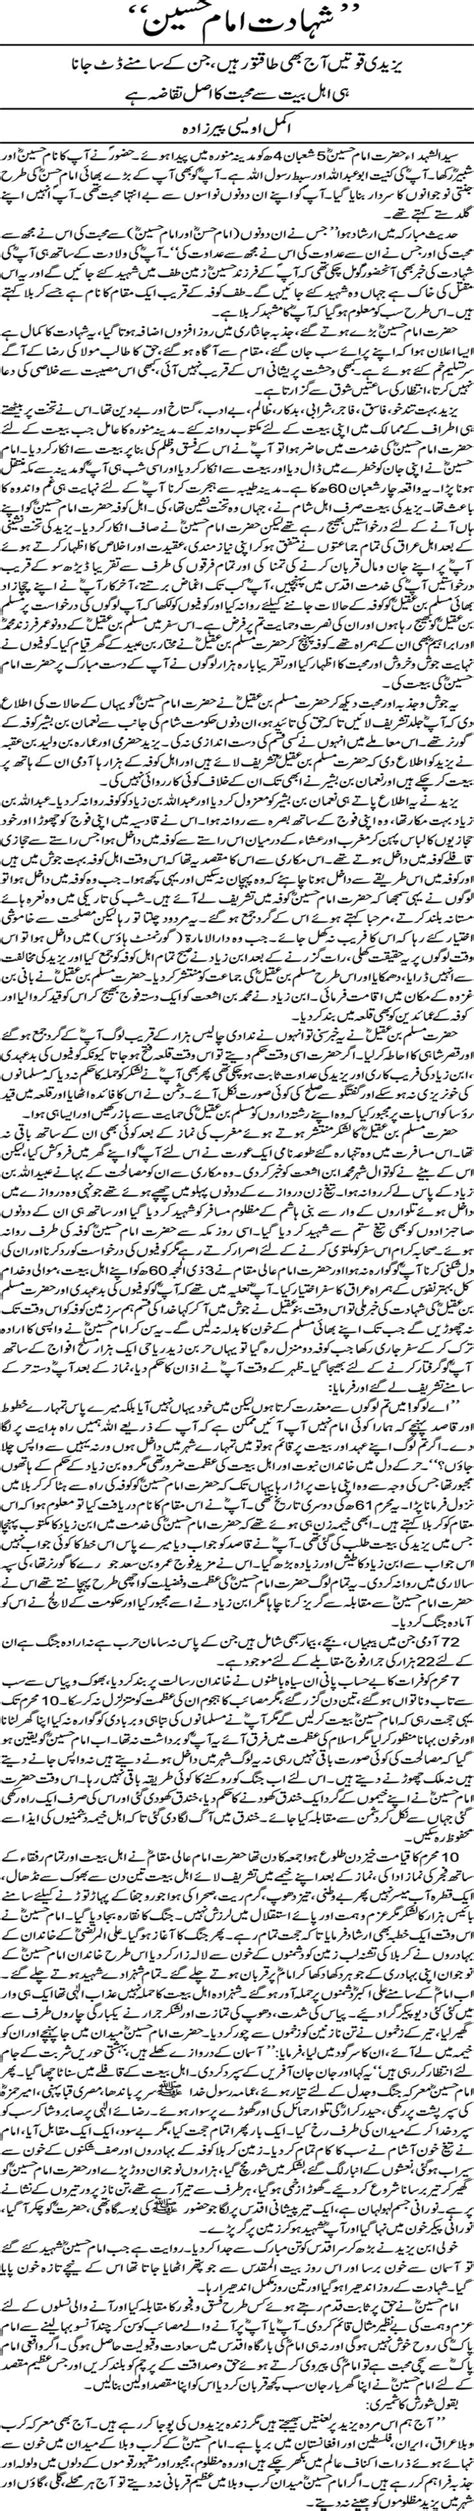 History Of 10th Muharram Youm E Ashura And Waqia Karbala In Urdu